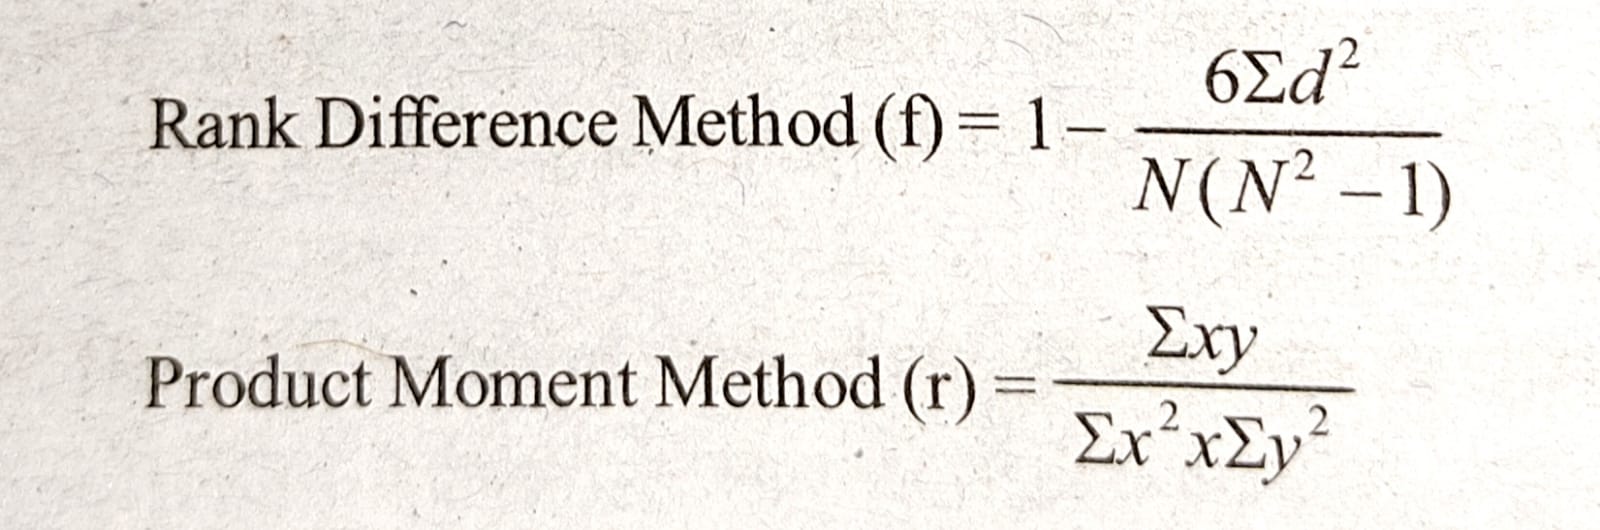 rank difference method formula